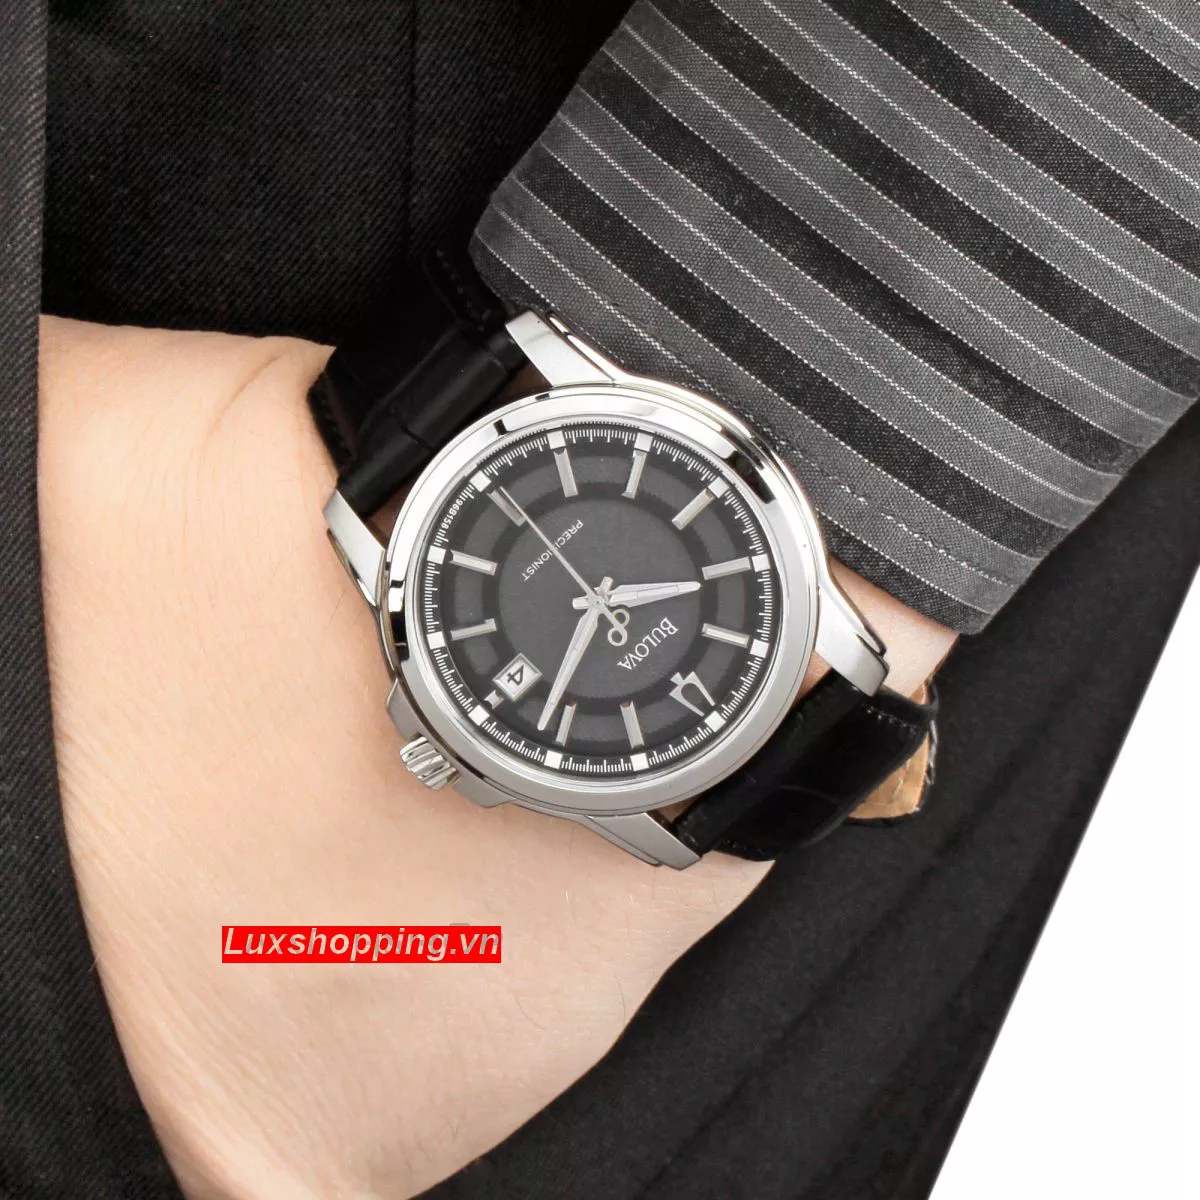  Bulova Precisionist Leather Watch 42mm